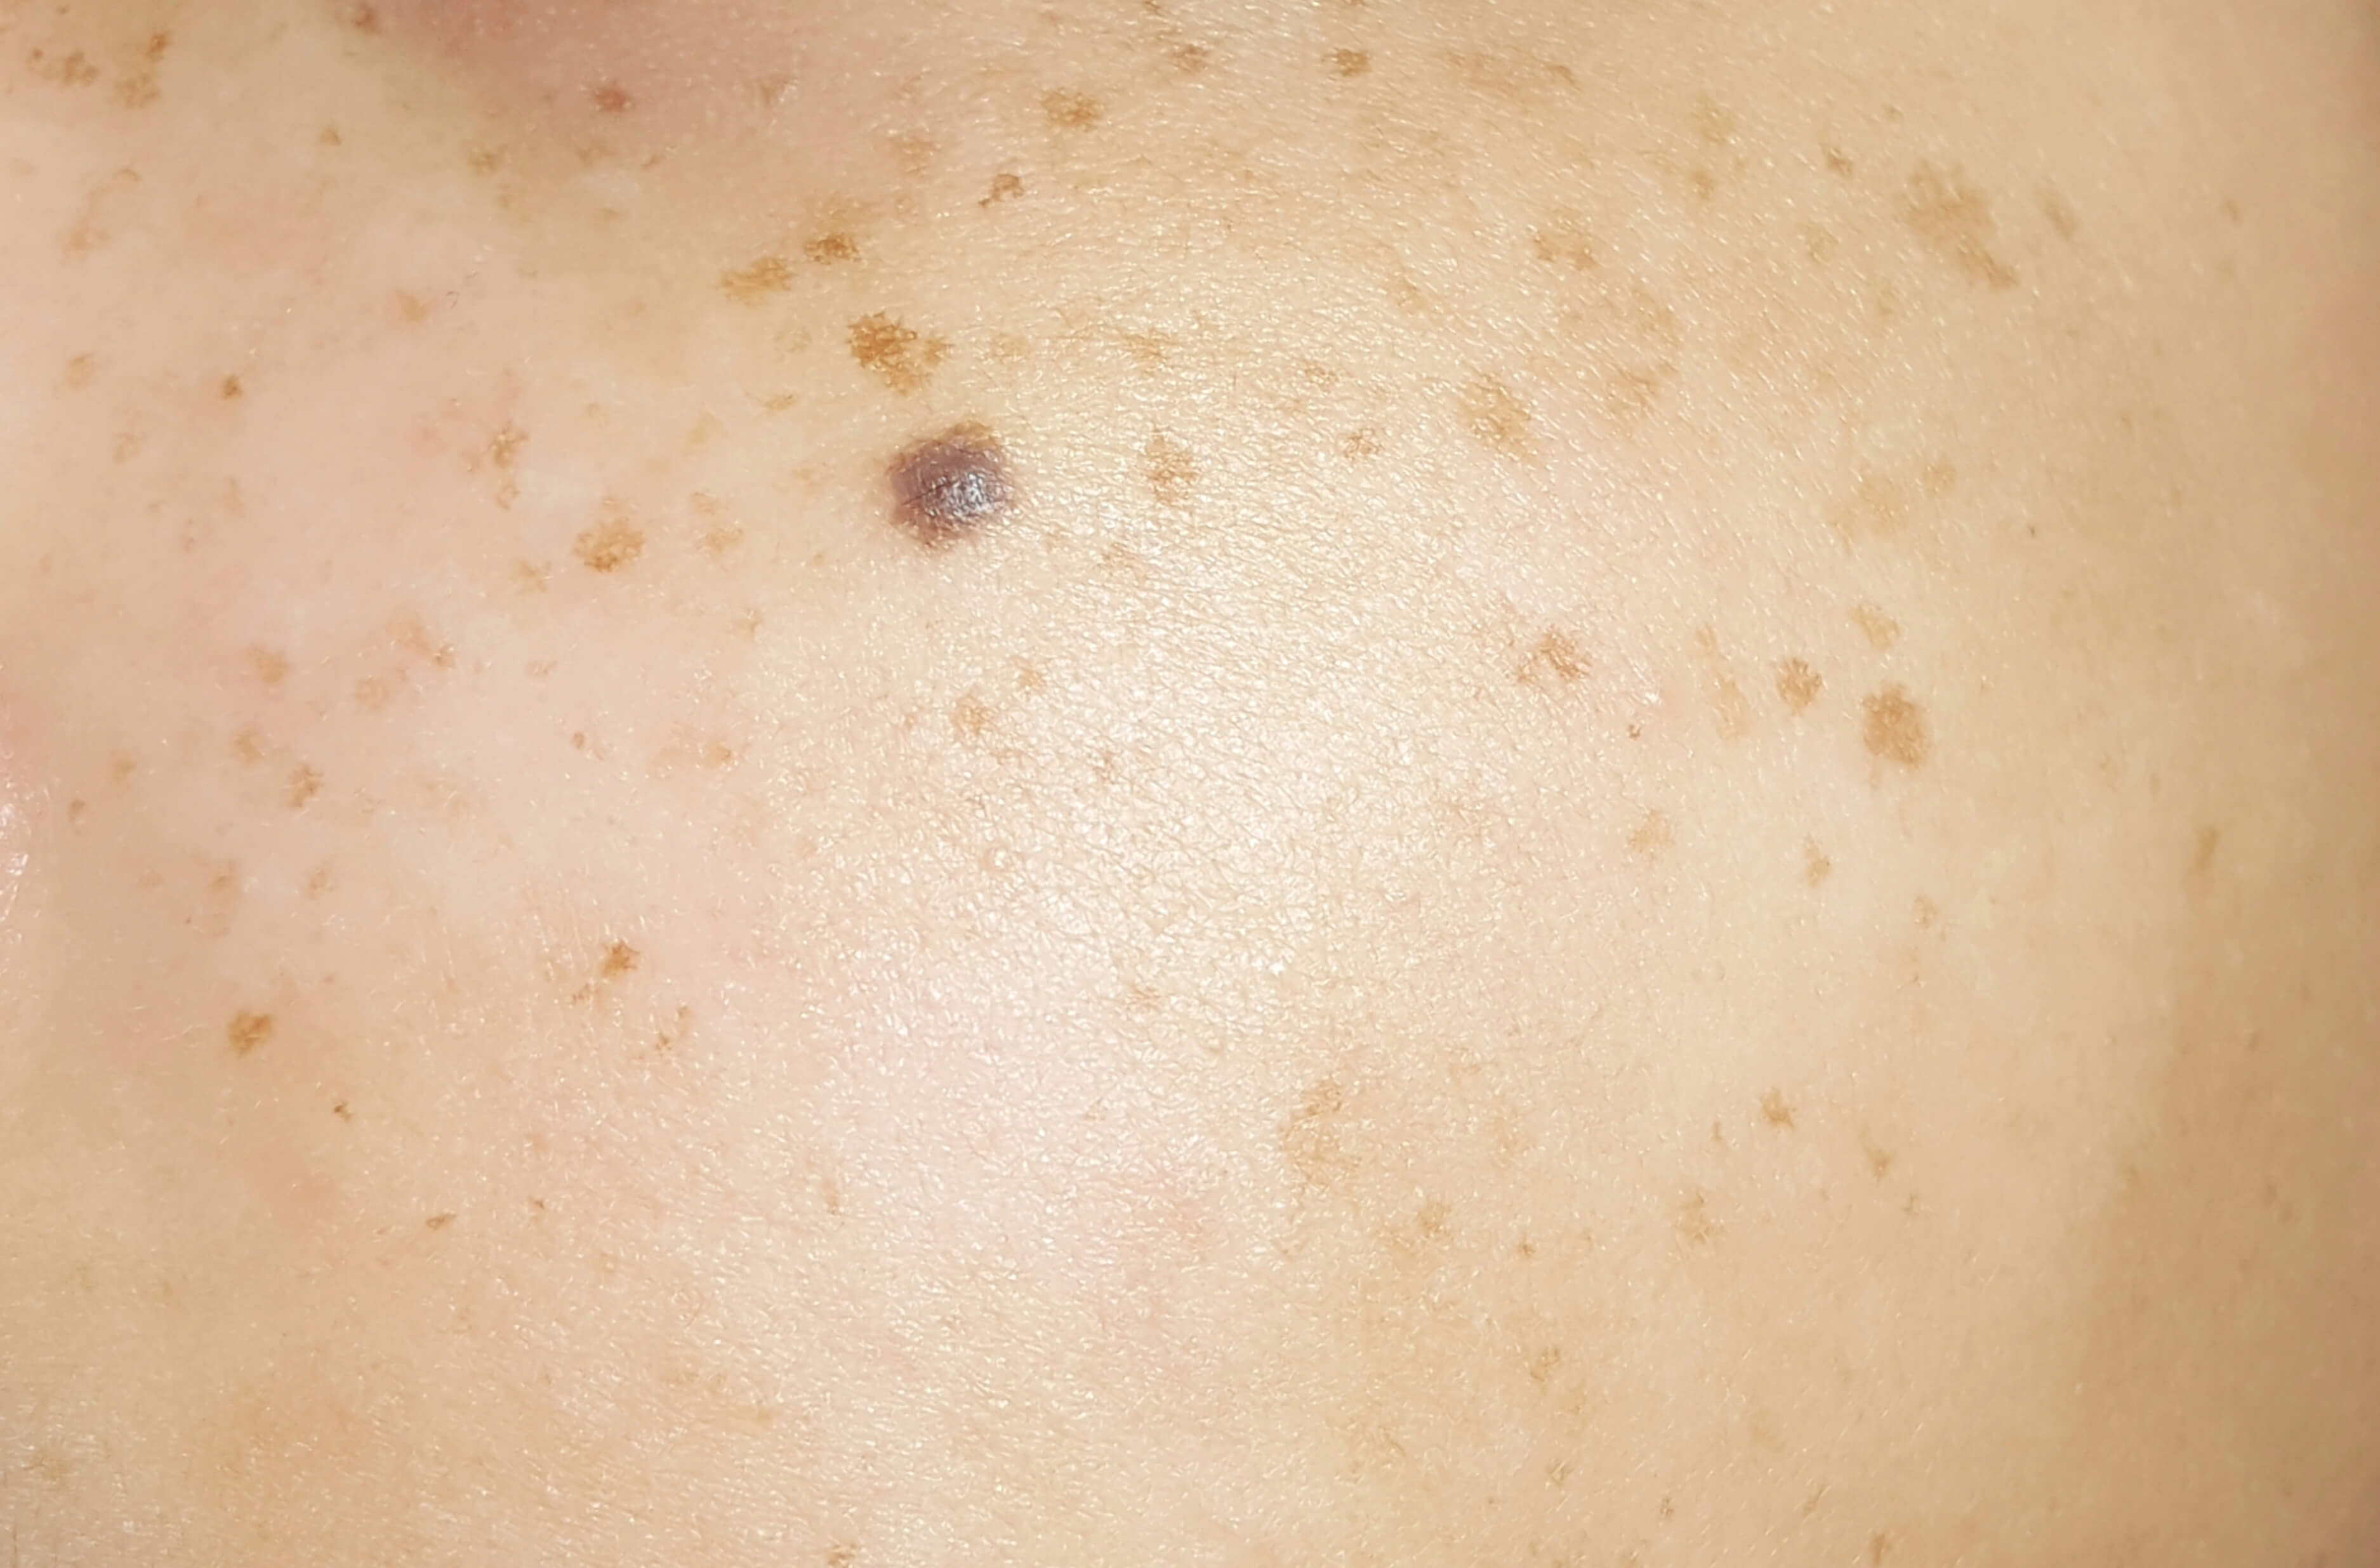 Dark spots on skin